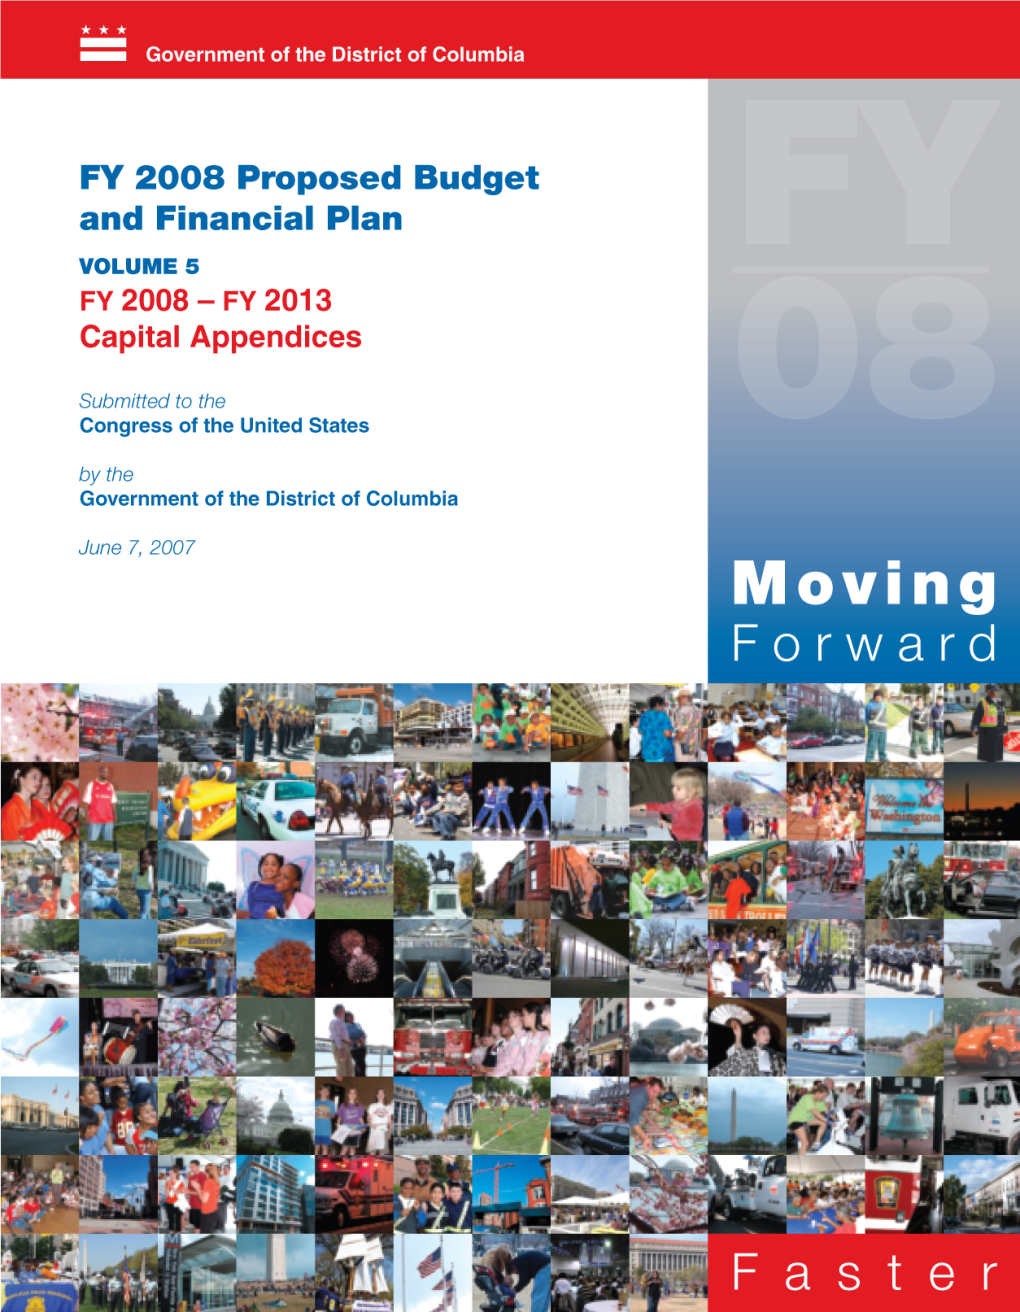 Volume 5 FY 2008 - FY 2013 Capital Appendices